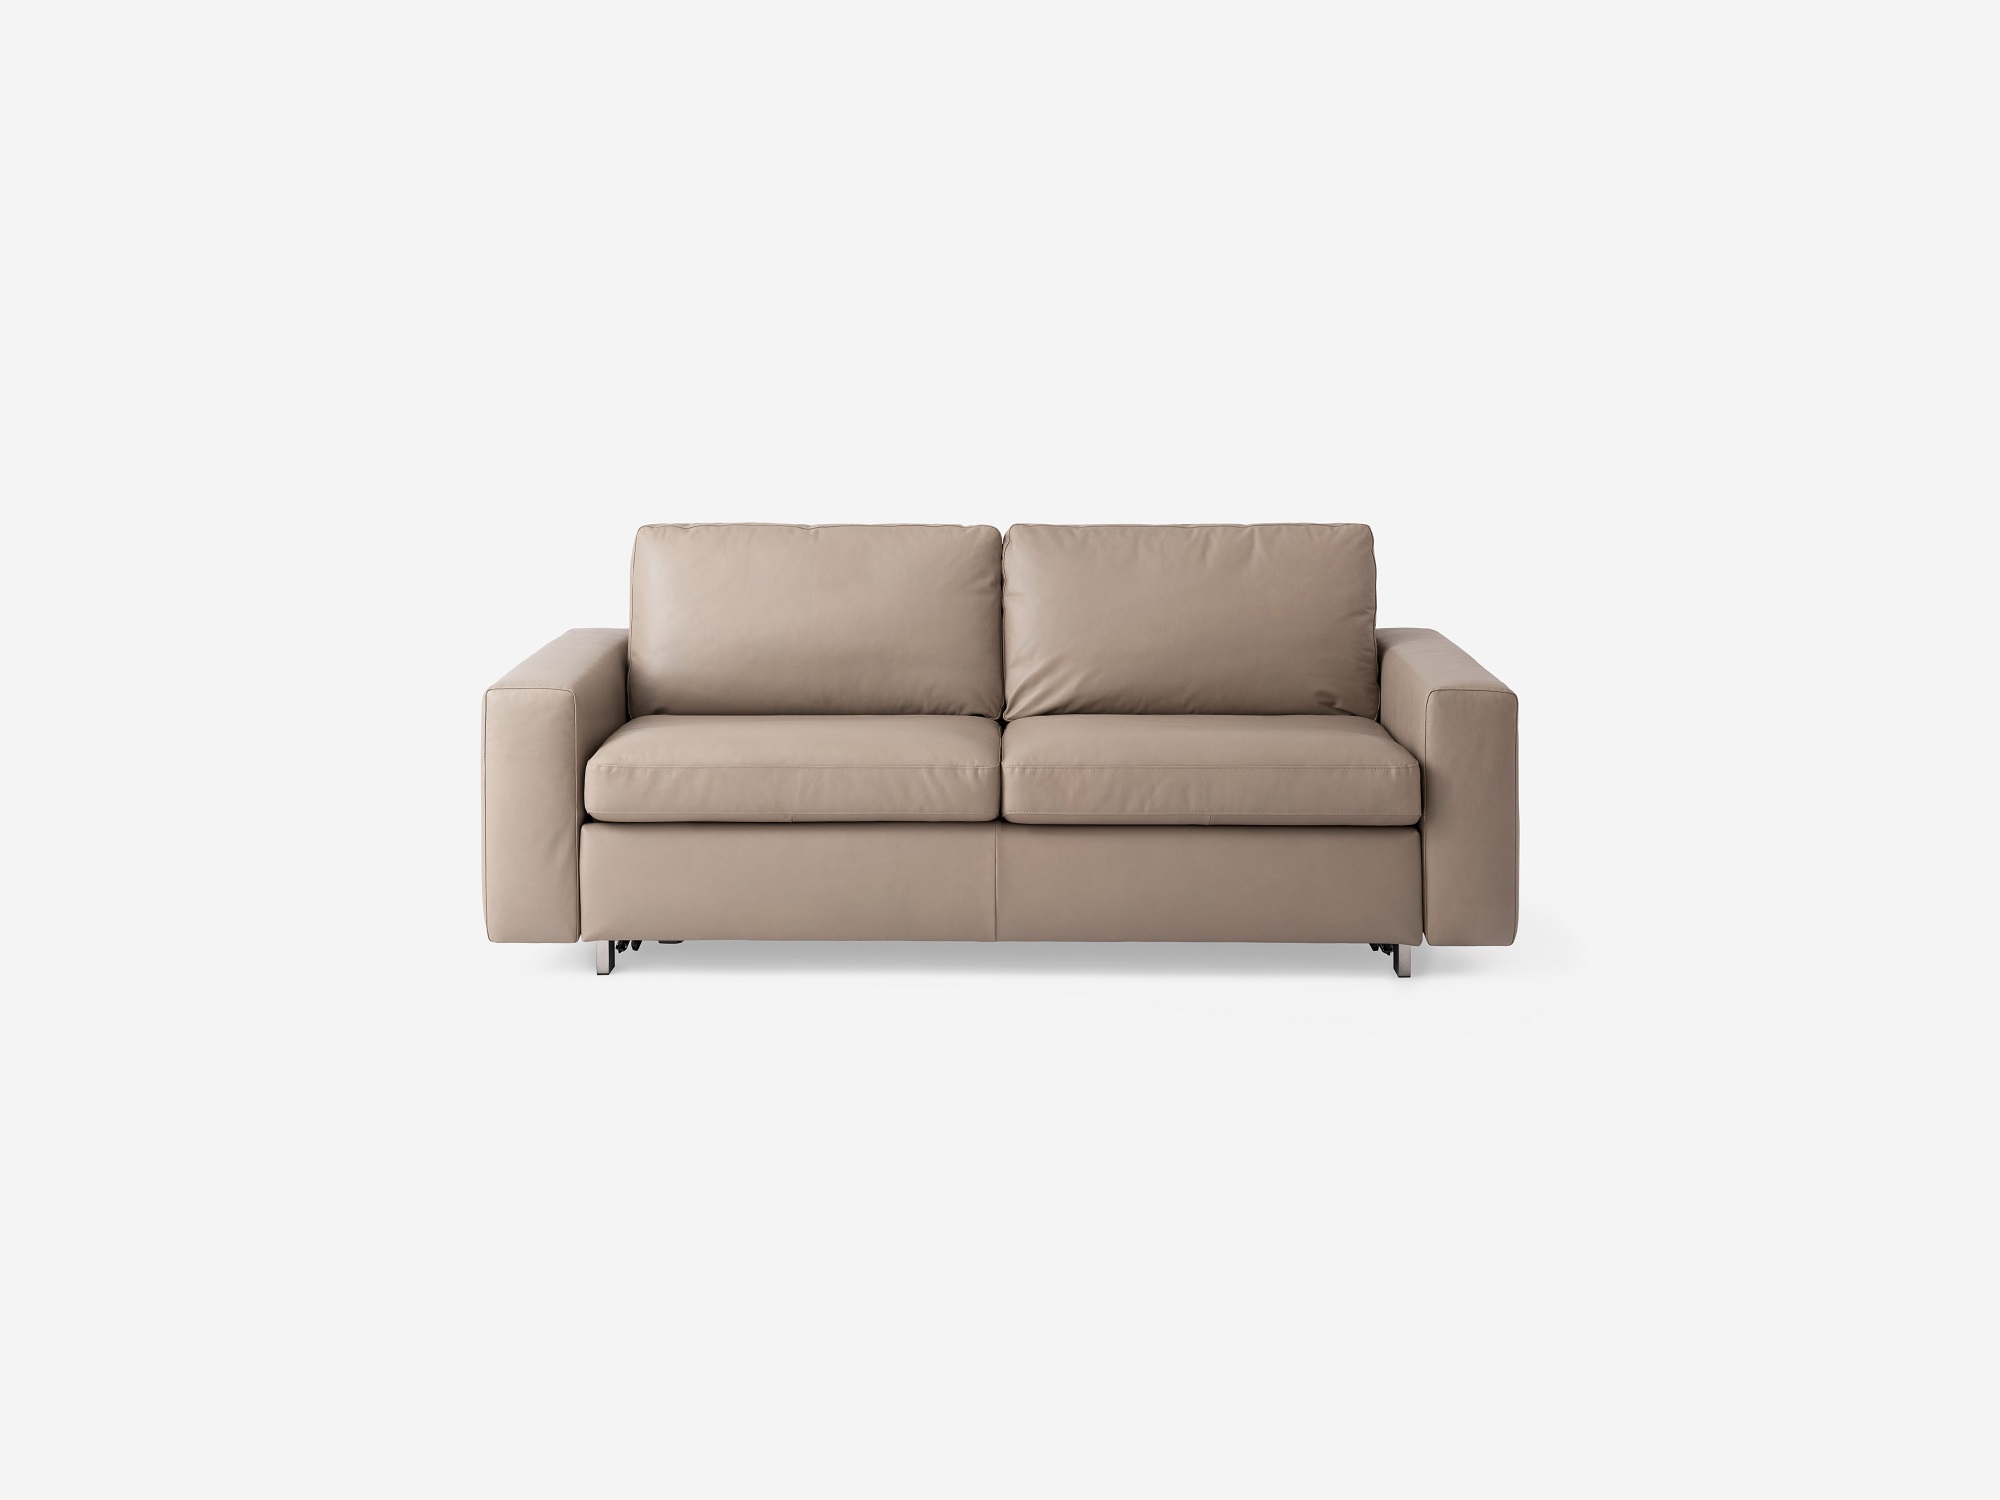 Reva Sleeper Sofa | Best Sleeper Sofa from EQ3